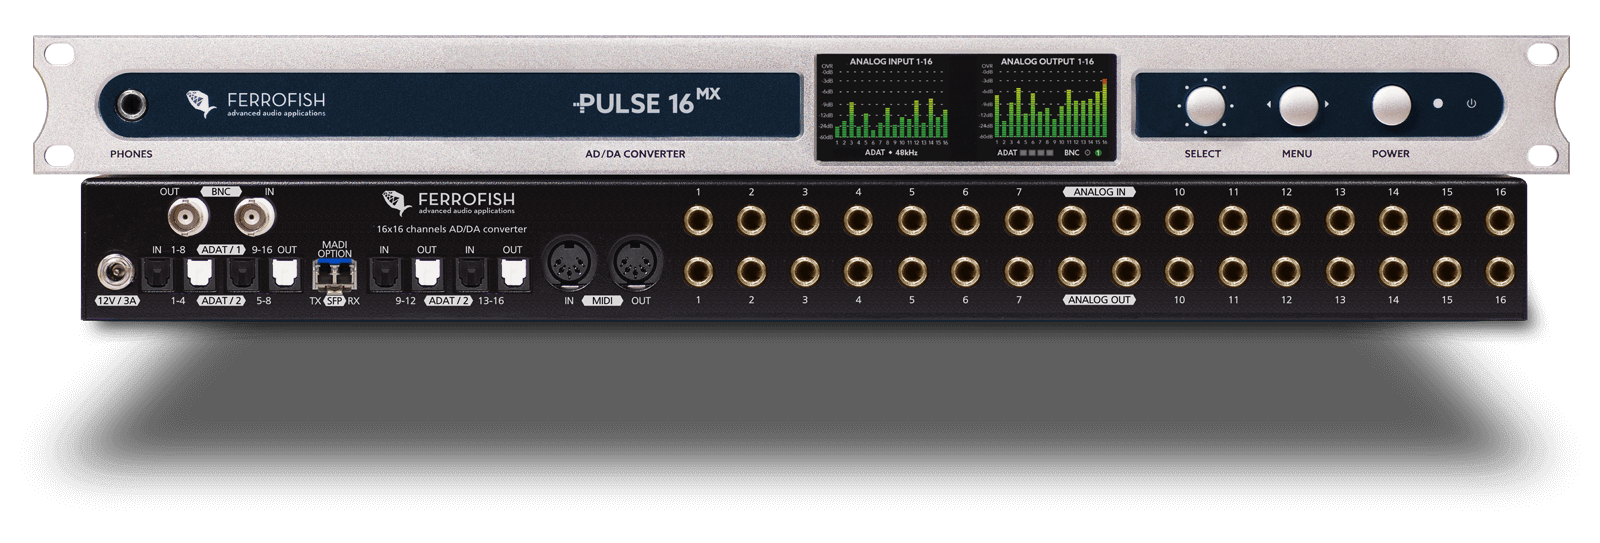 New Ferrofish Pulse 16 MX w/ Analog I/O Modified for +24dBu Level Compatibility | High Quality MADI Converter